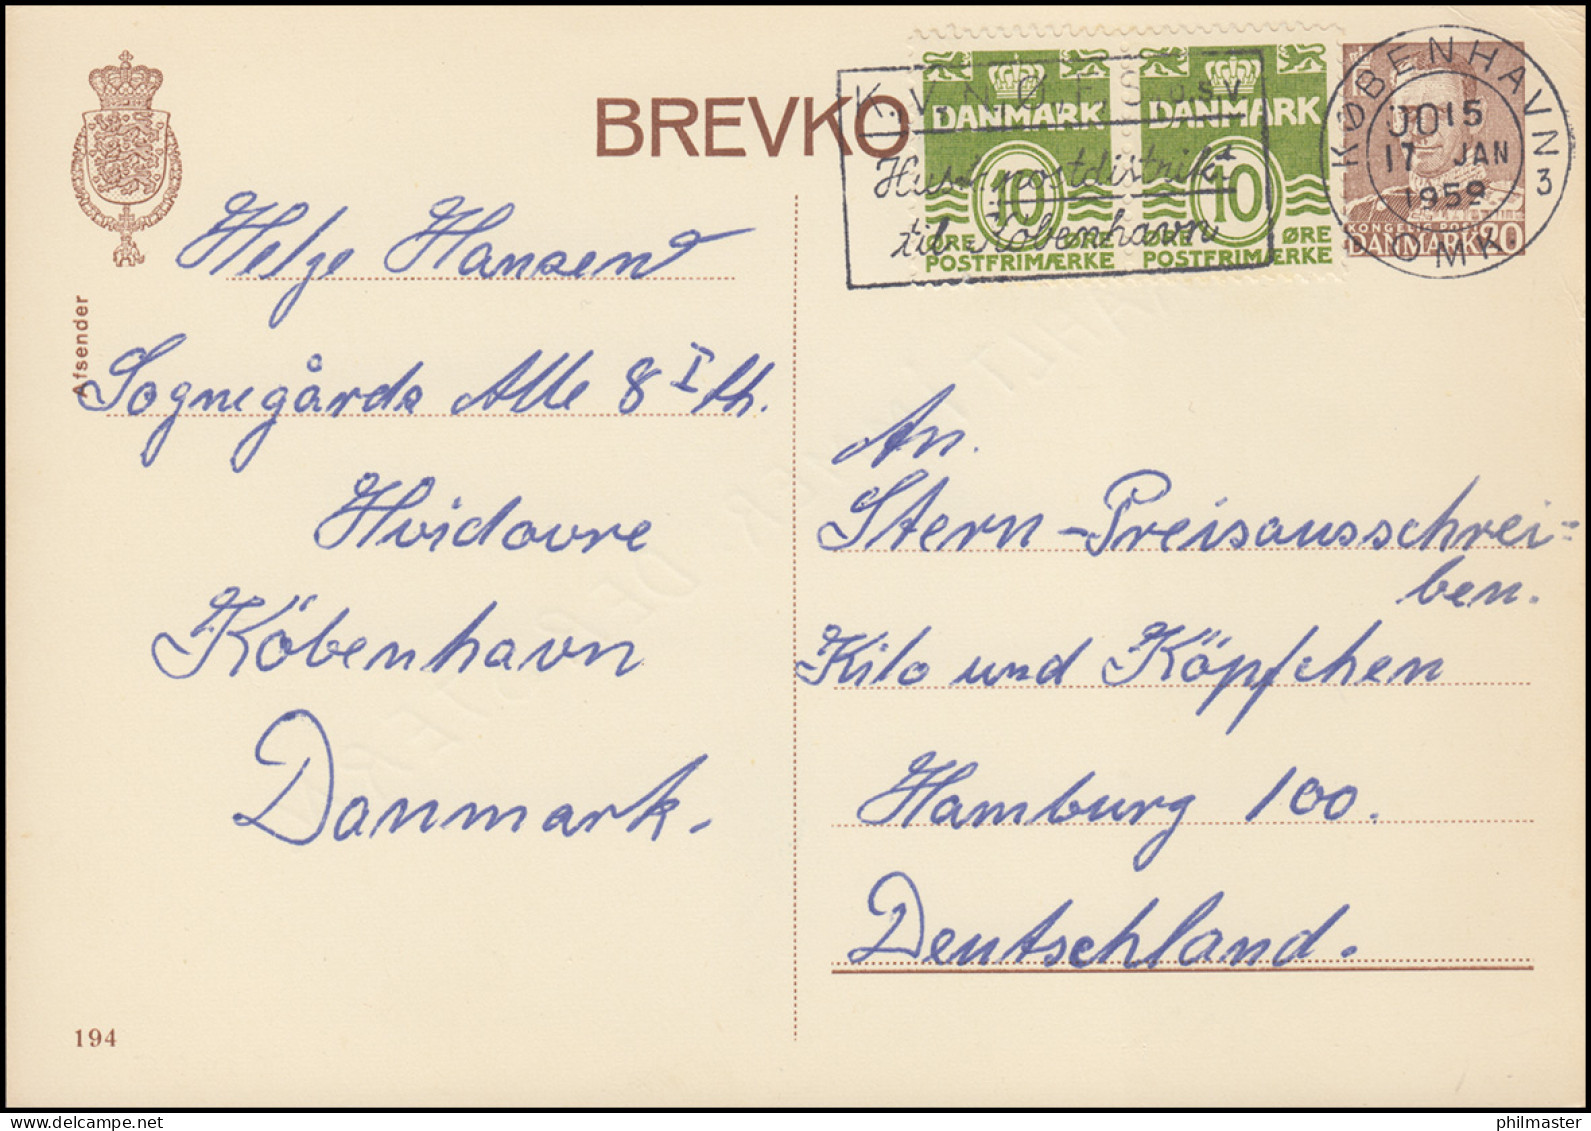 Dänemark Postkarte P 243II Frederik IX. 20 Öre, Kz. 194, KØBENHAVN 17.1.1959 - Postal Stationery